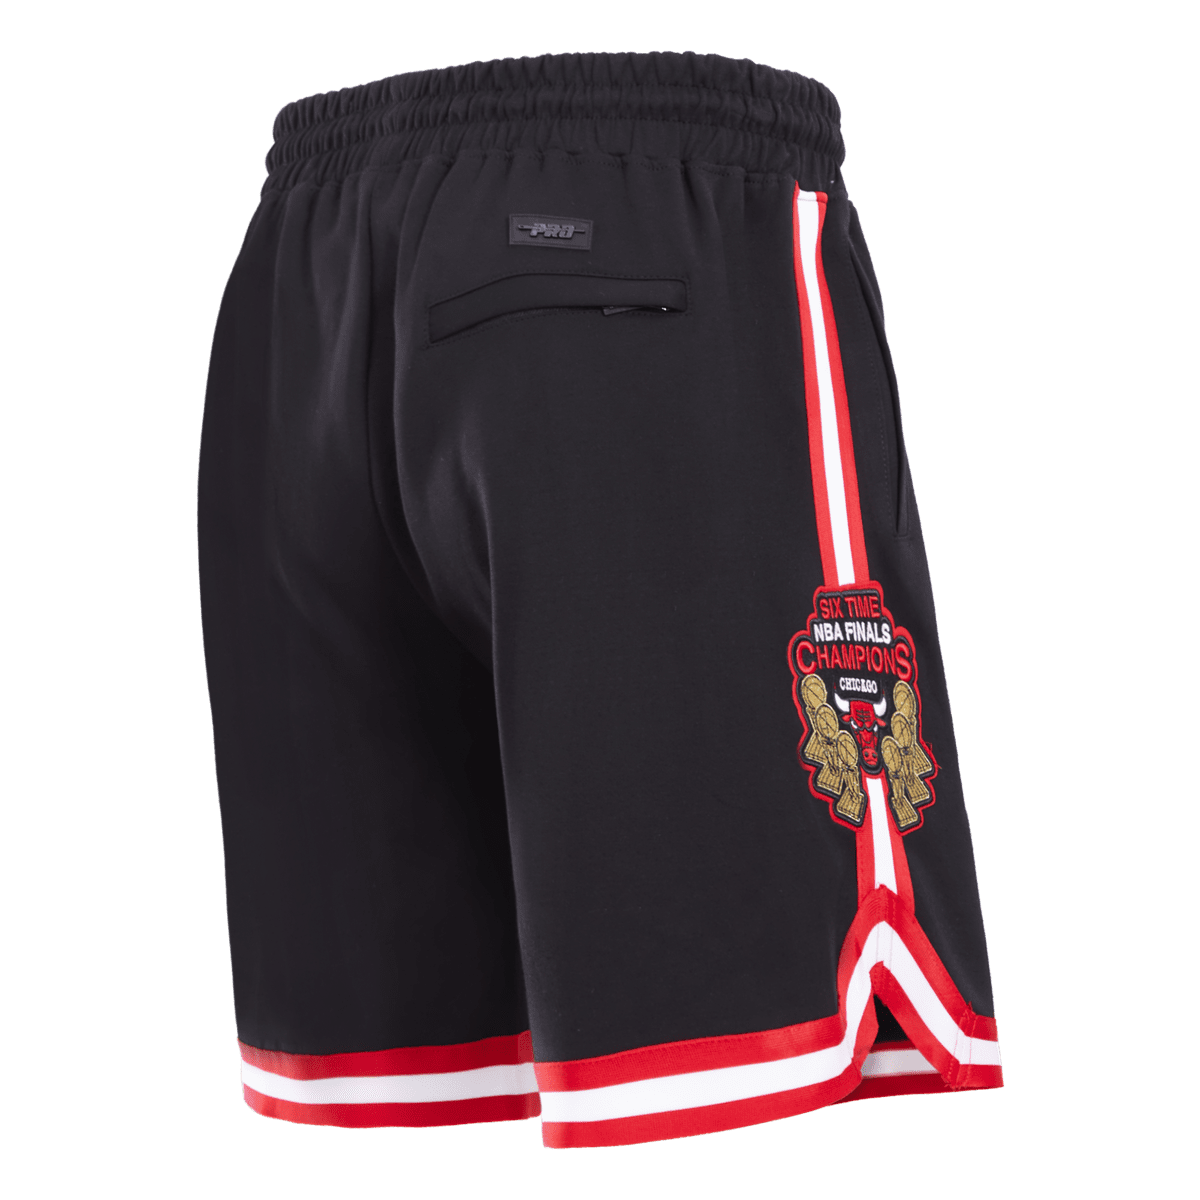 Pro Standard Nba Chicago Bulls Pro Team Shorts Mens Style